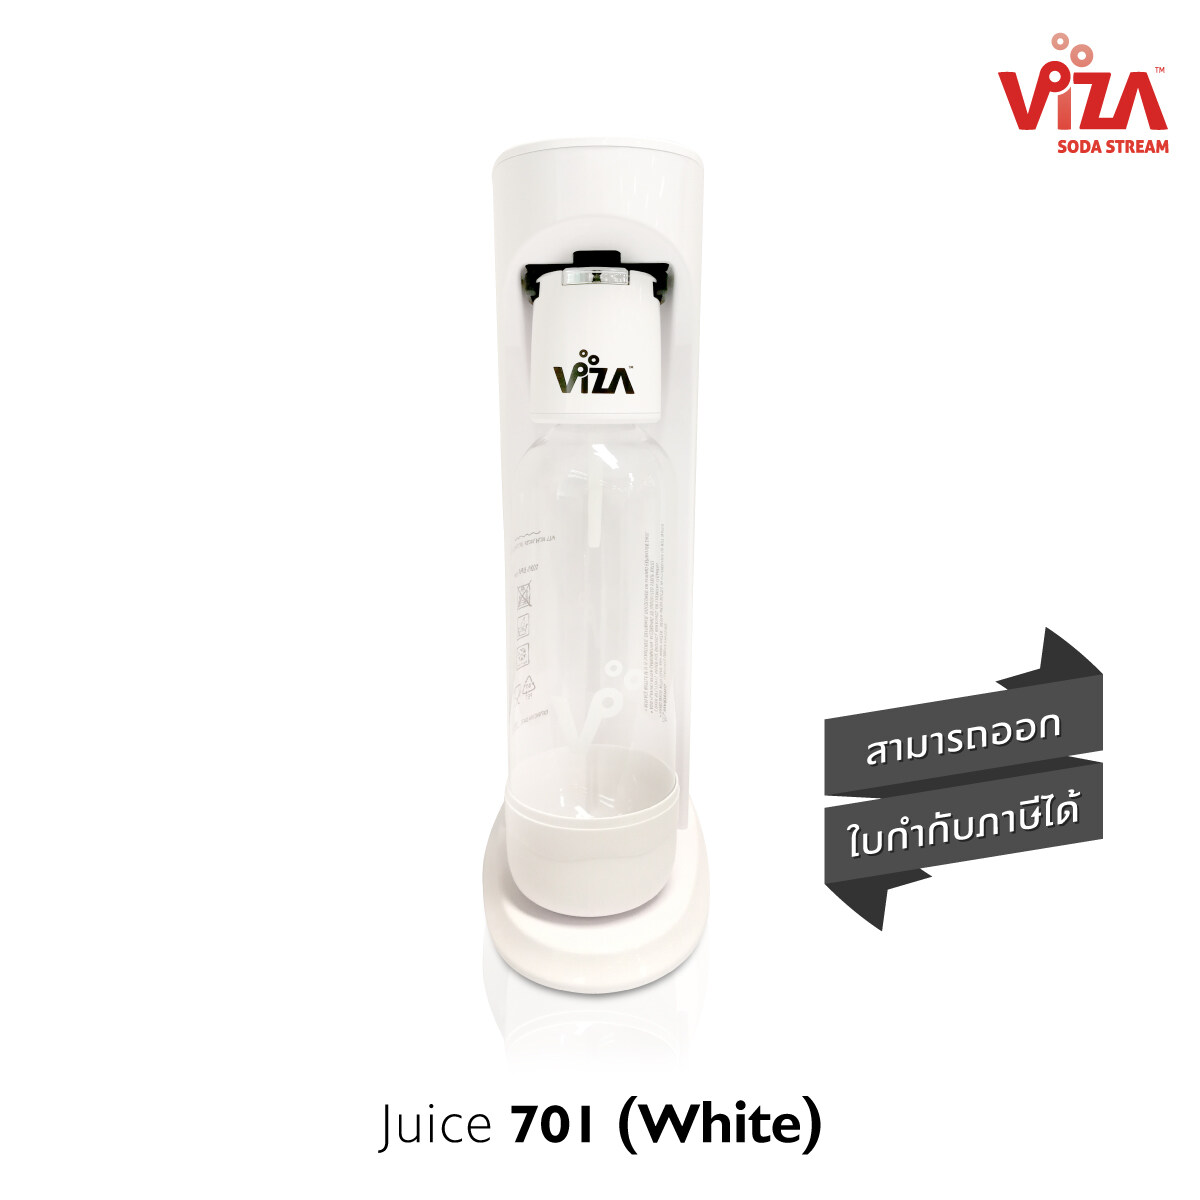 viza soda stream machine เครื่องทำโซดา มะนาวโซดา Viza Soda Stream - juice 701